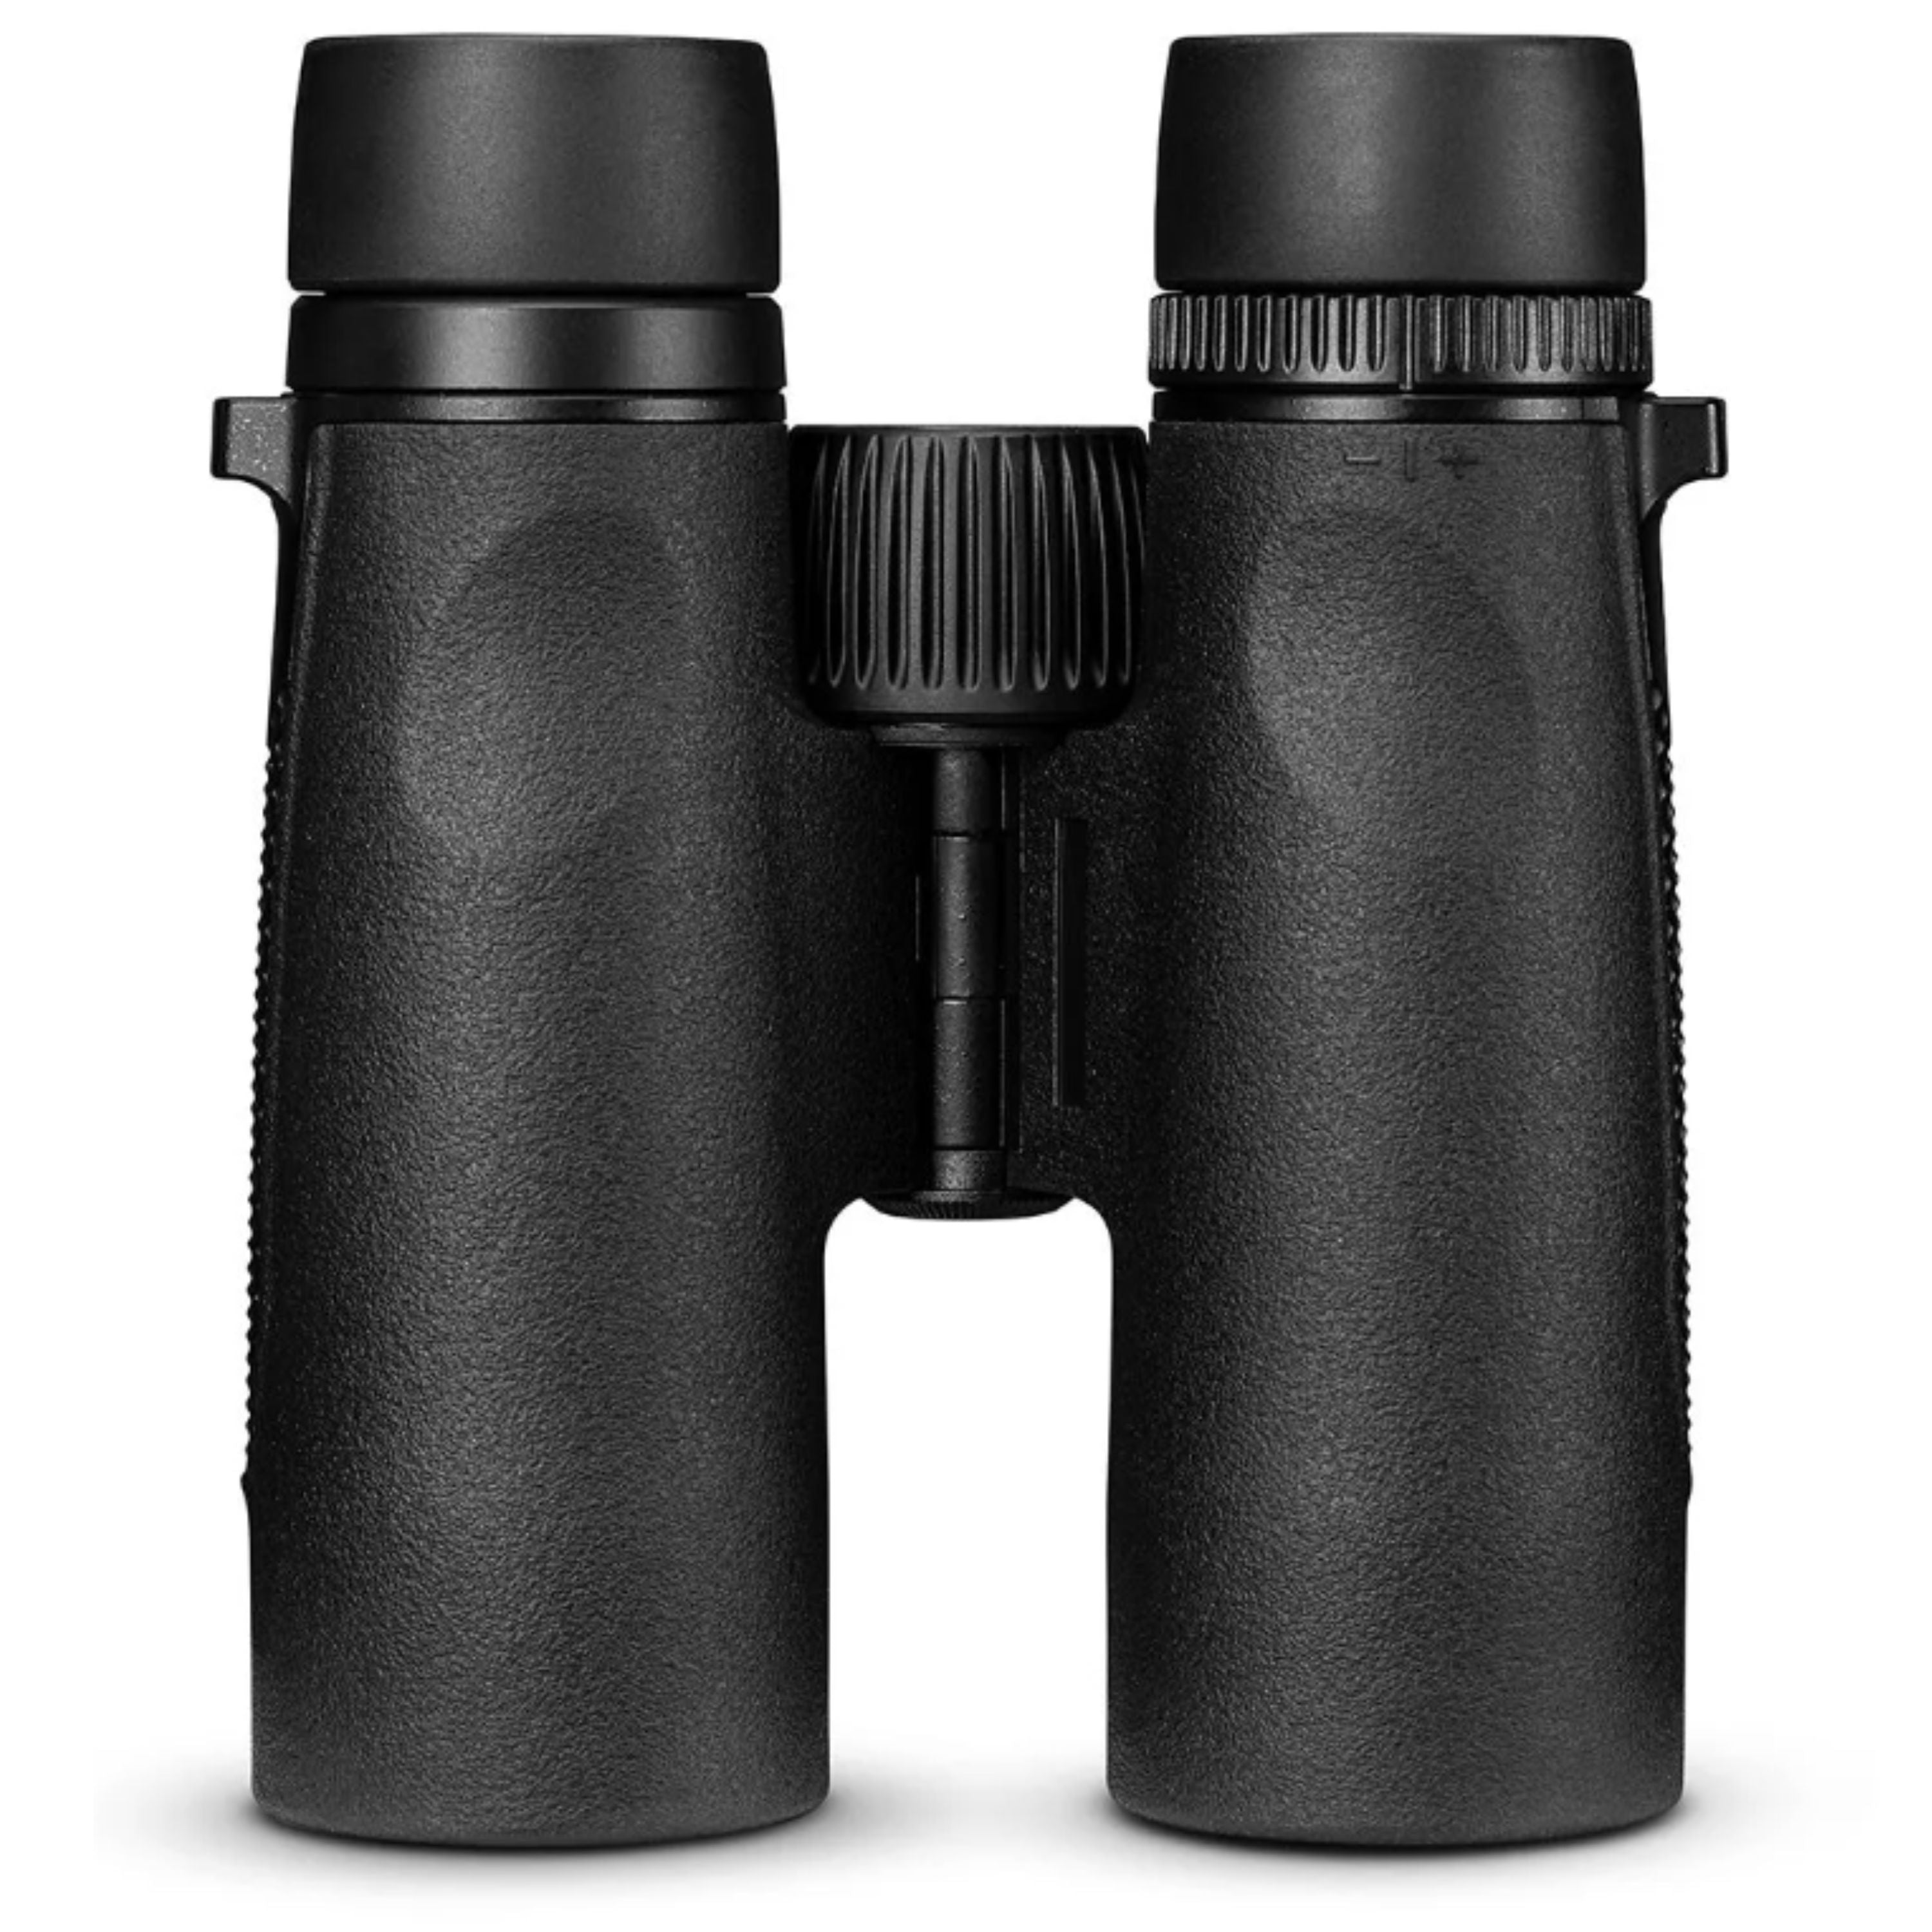 "Copperhead" 10x42 mm Binoculars